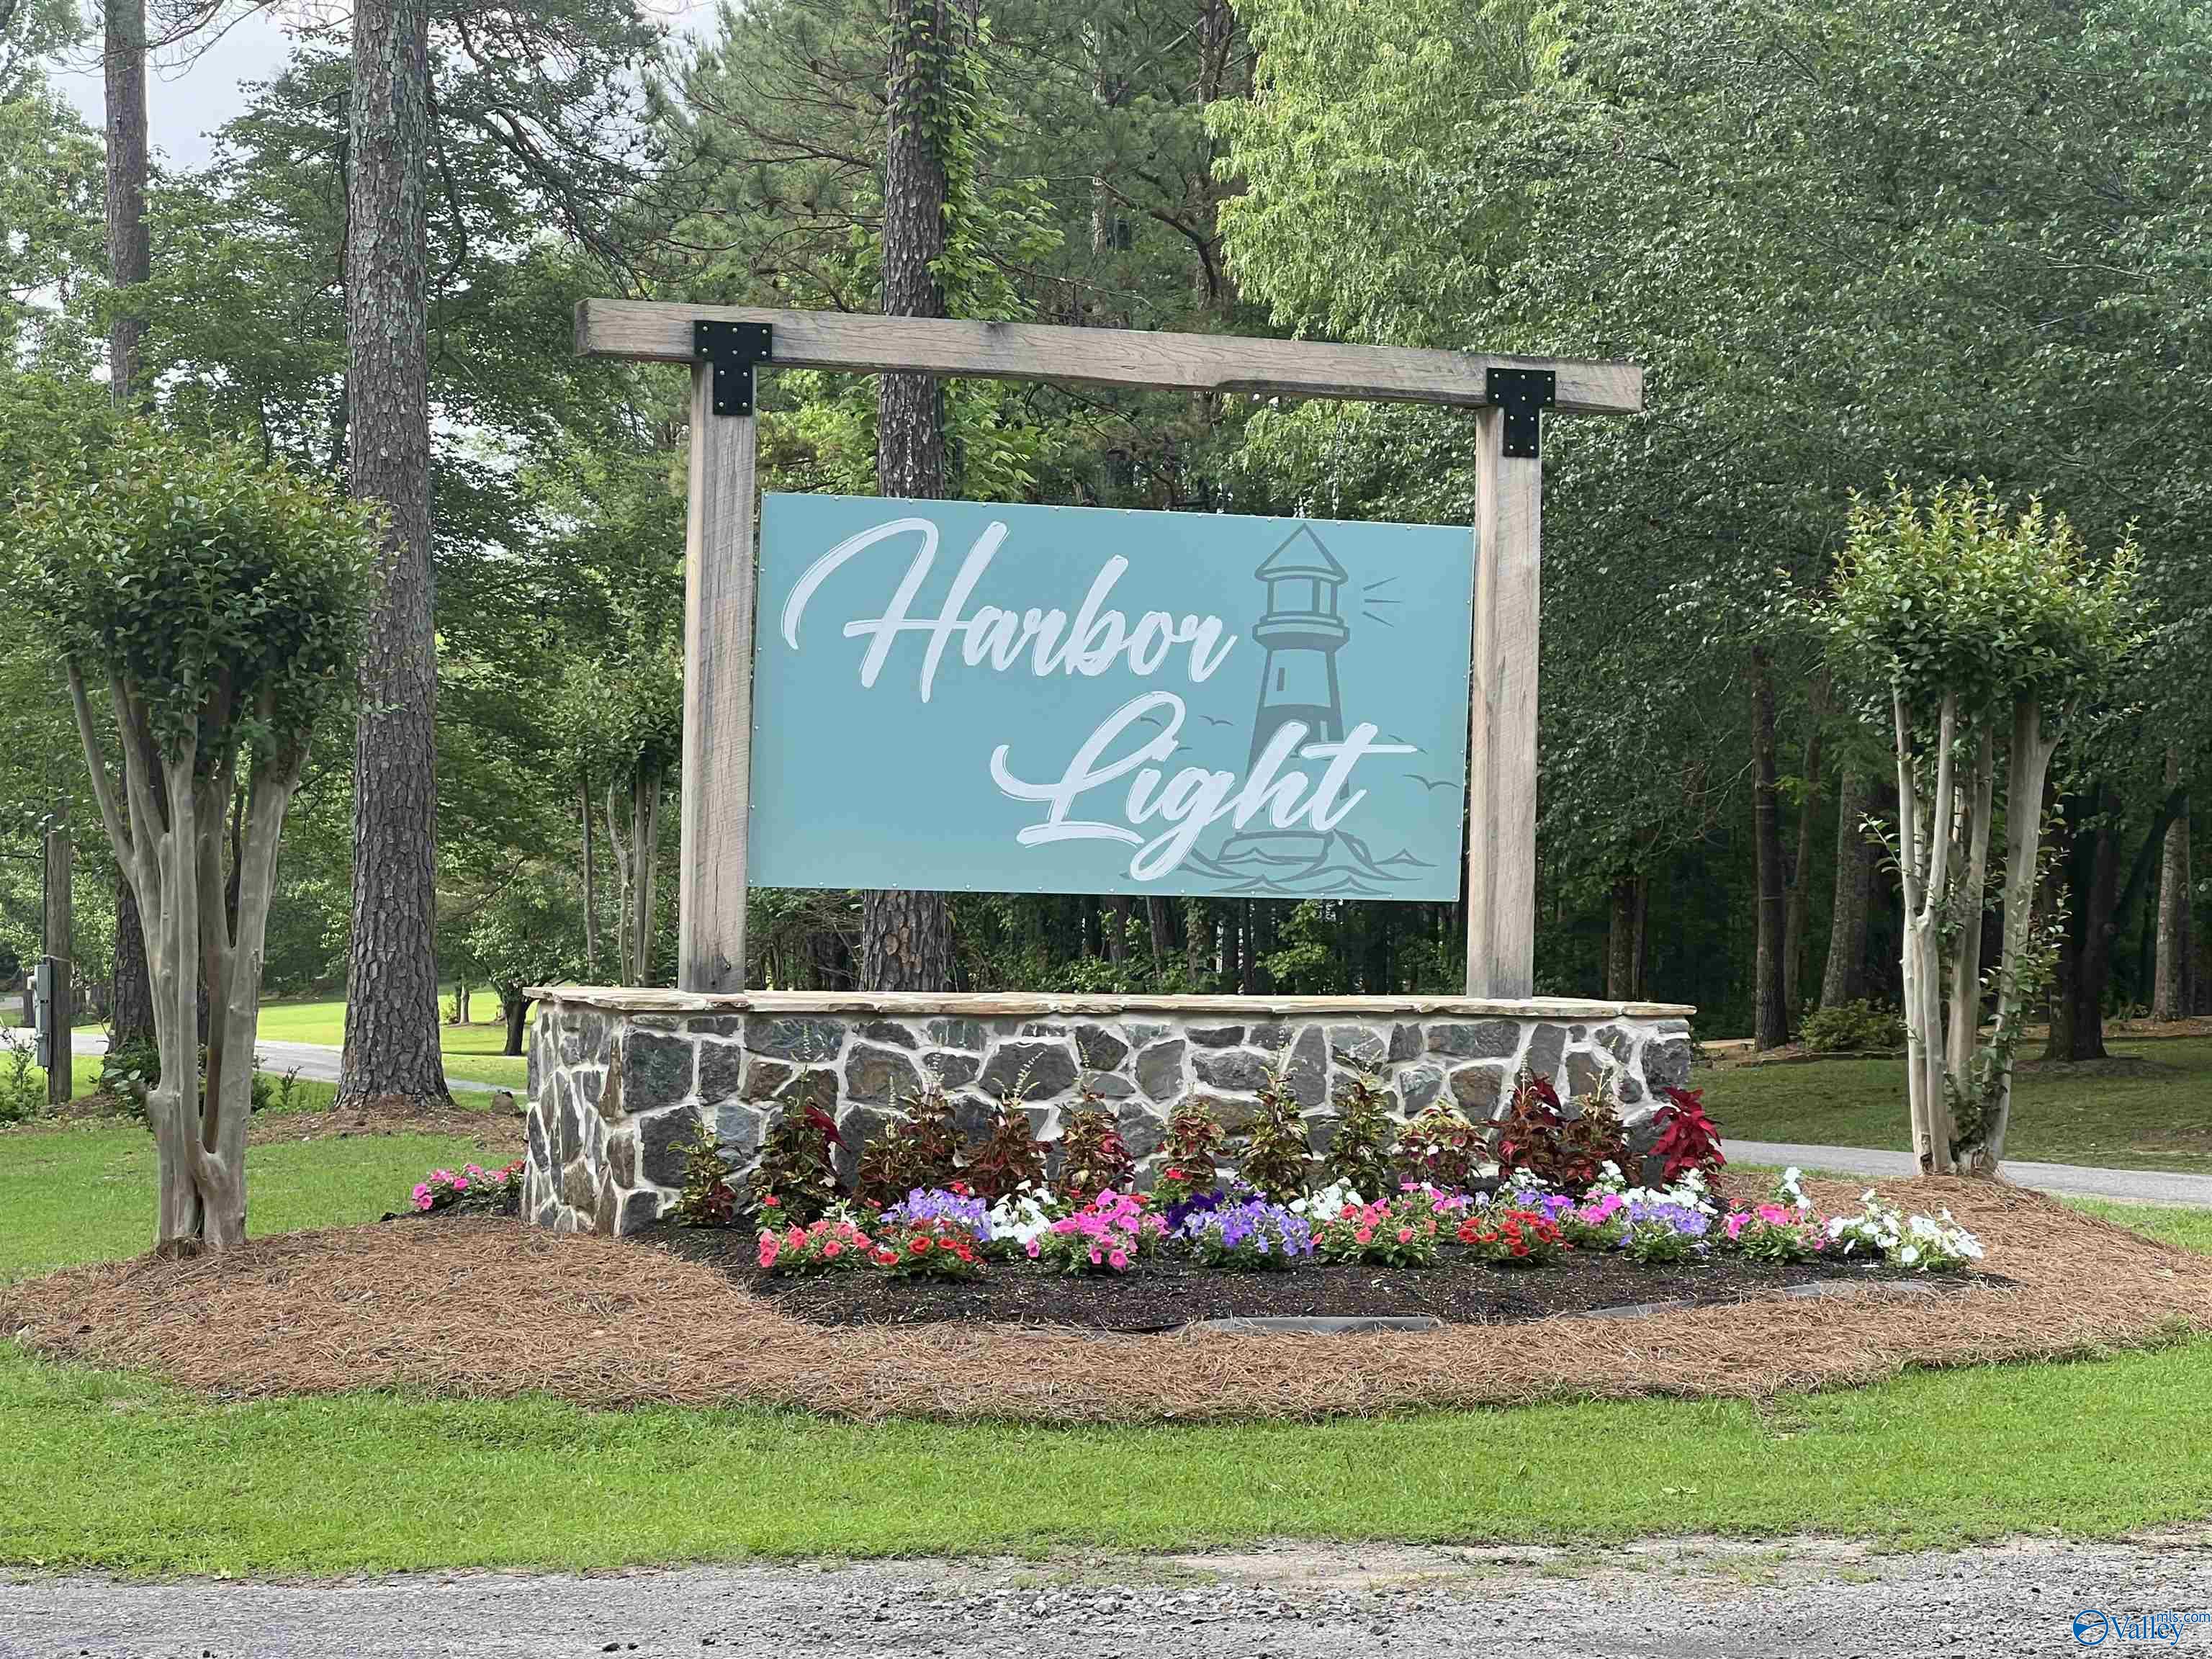 Property: 75 Harbor Lights Trail,Jasper, AL